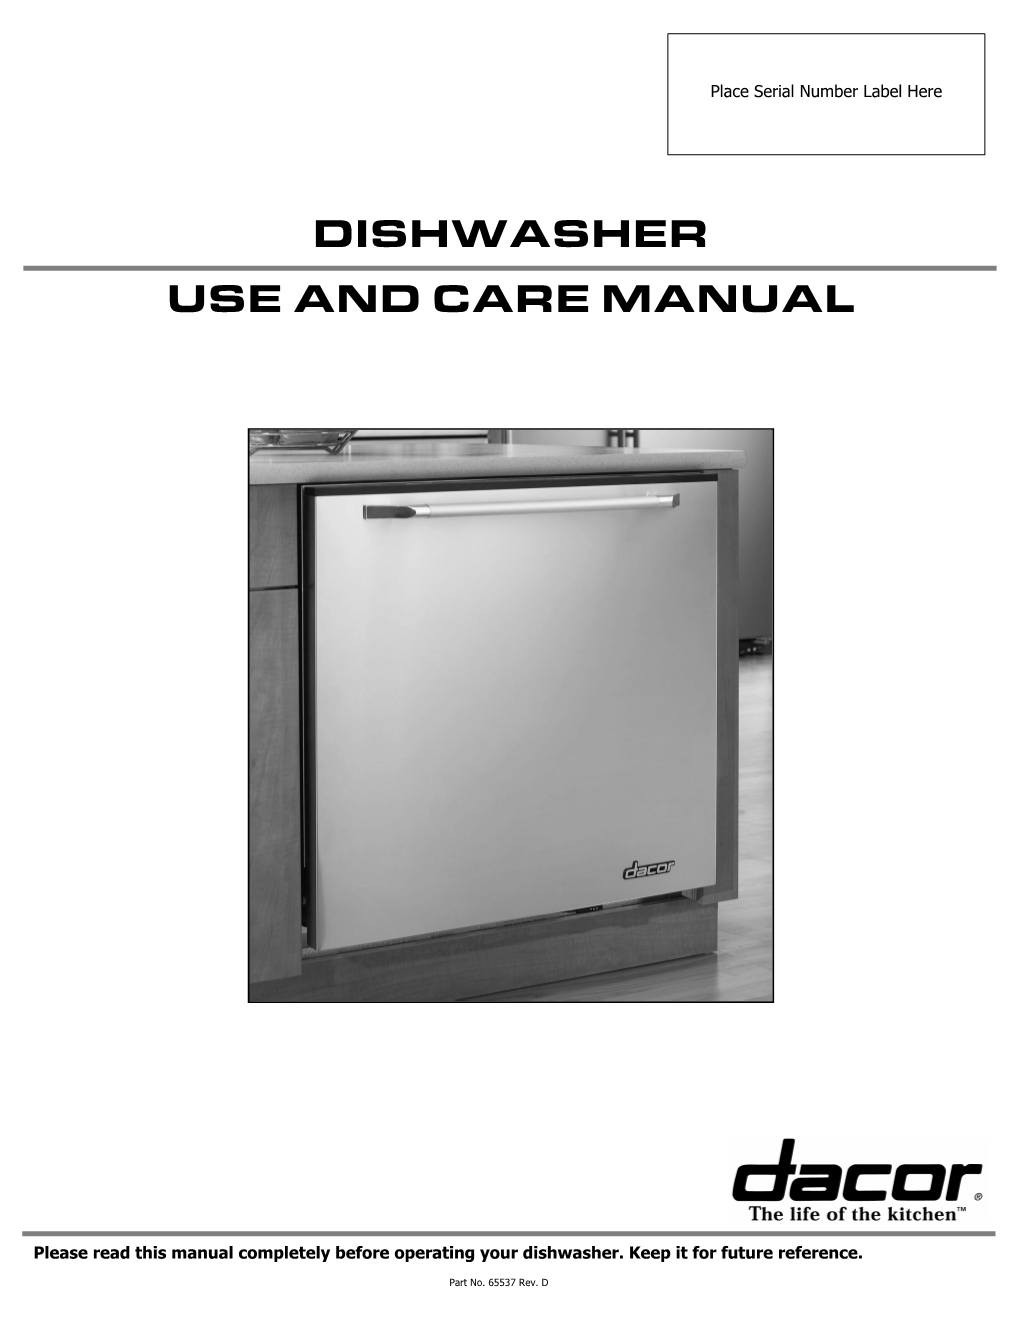 Dishwasher Use and Care Manual